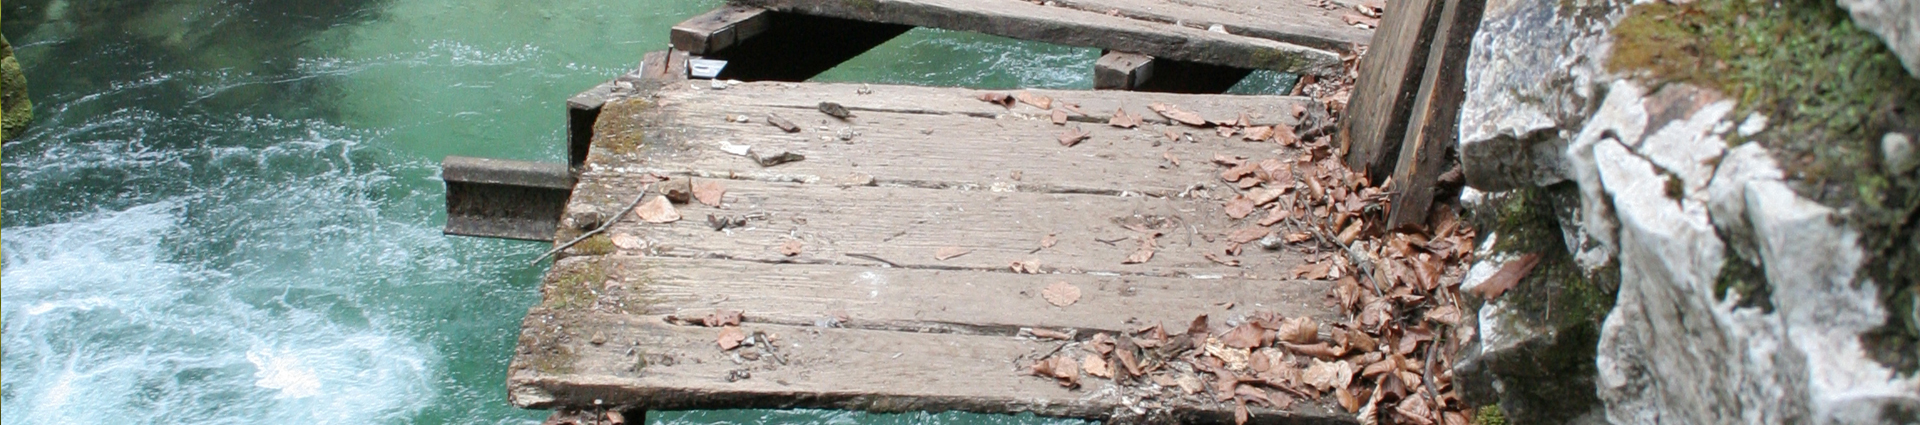 Bridge over troubled water